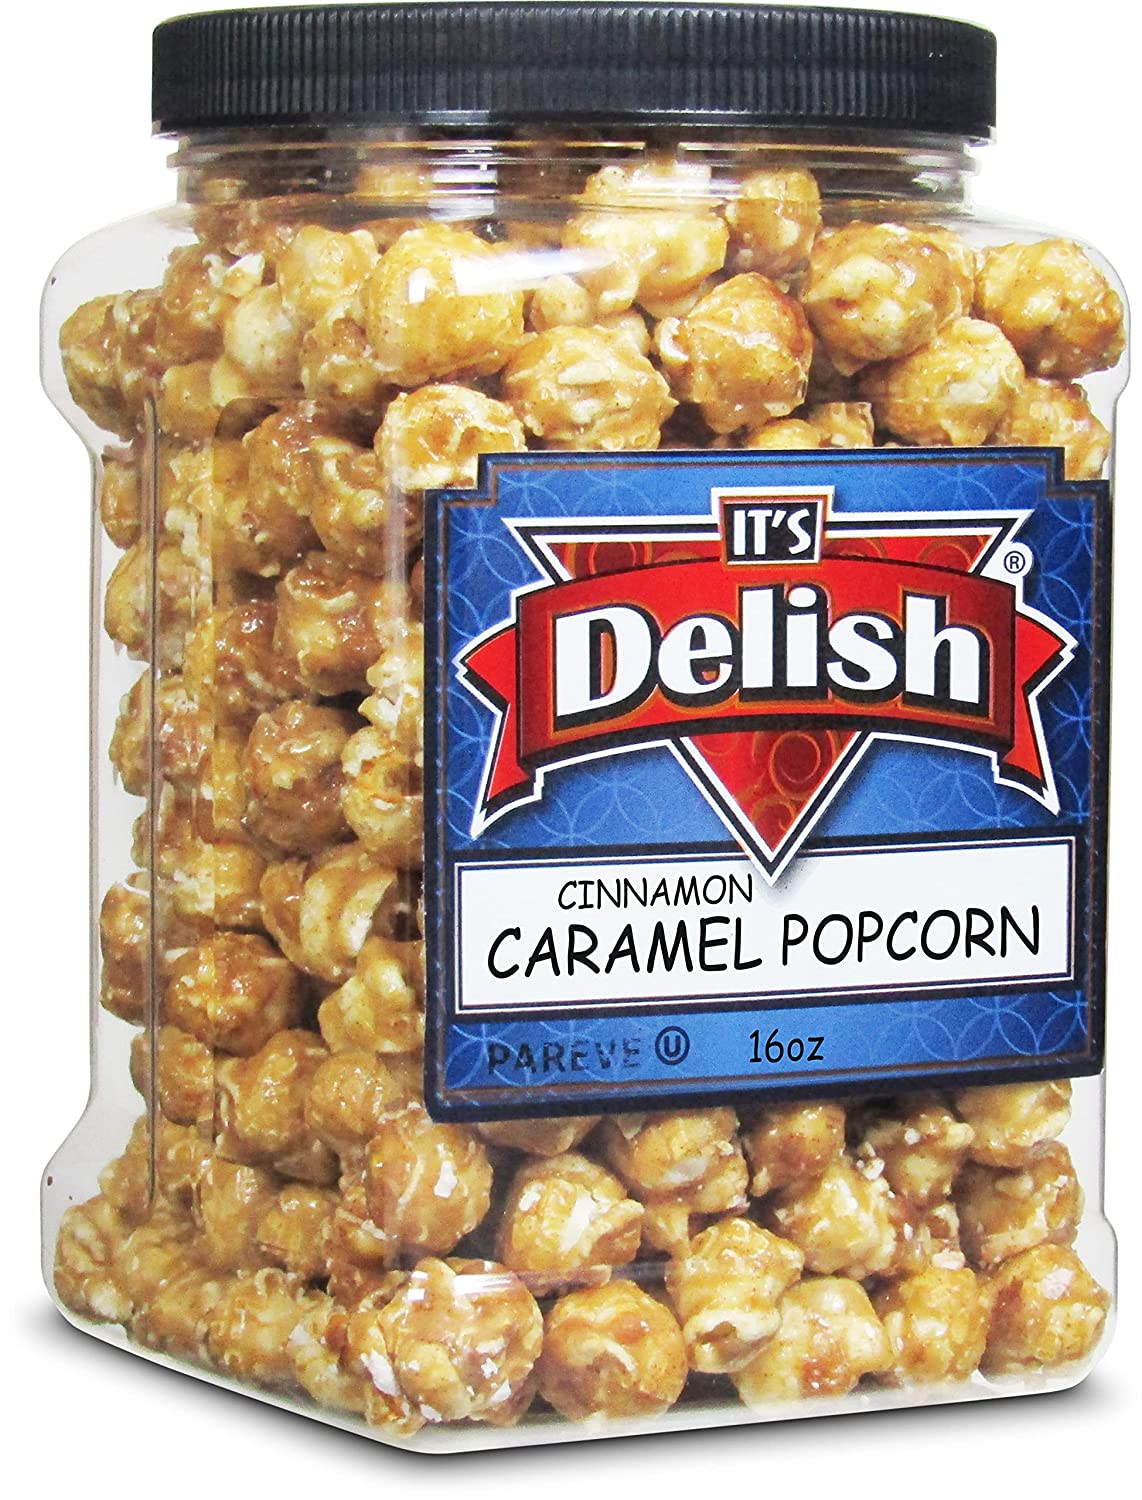 It's Delish Gourmet Cinnamon Caramel Popcorn by Its Delish, 16 OZ Jumbo Container – Caramel Corn Air Popped Sweet & Crunchy Glazed Carmel Corn Snack - Gluten Free, Vegan, Kosher, 1 Count